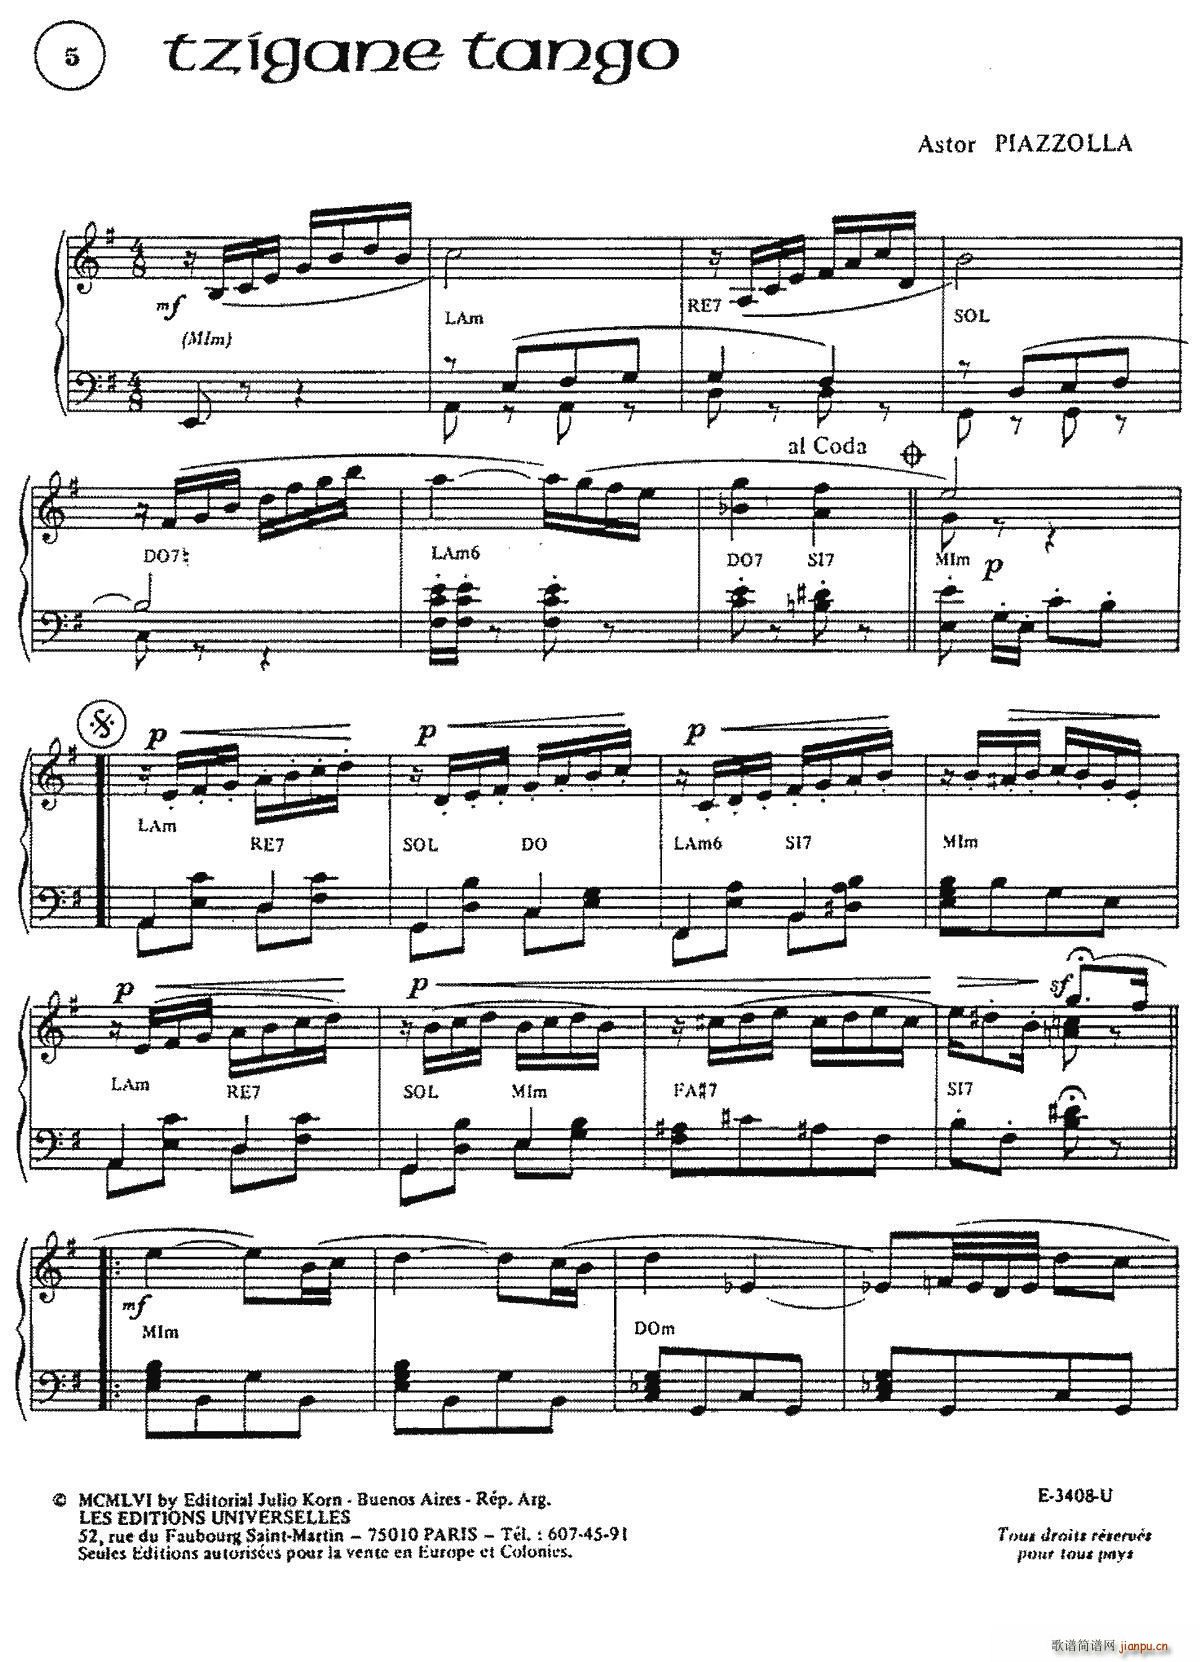 Piazzolla合集 5 Tzigand Tango 古典探戈(手风琴谱)1